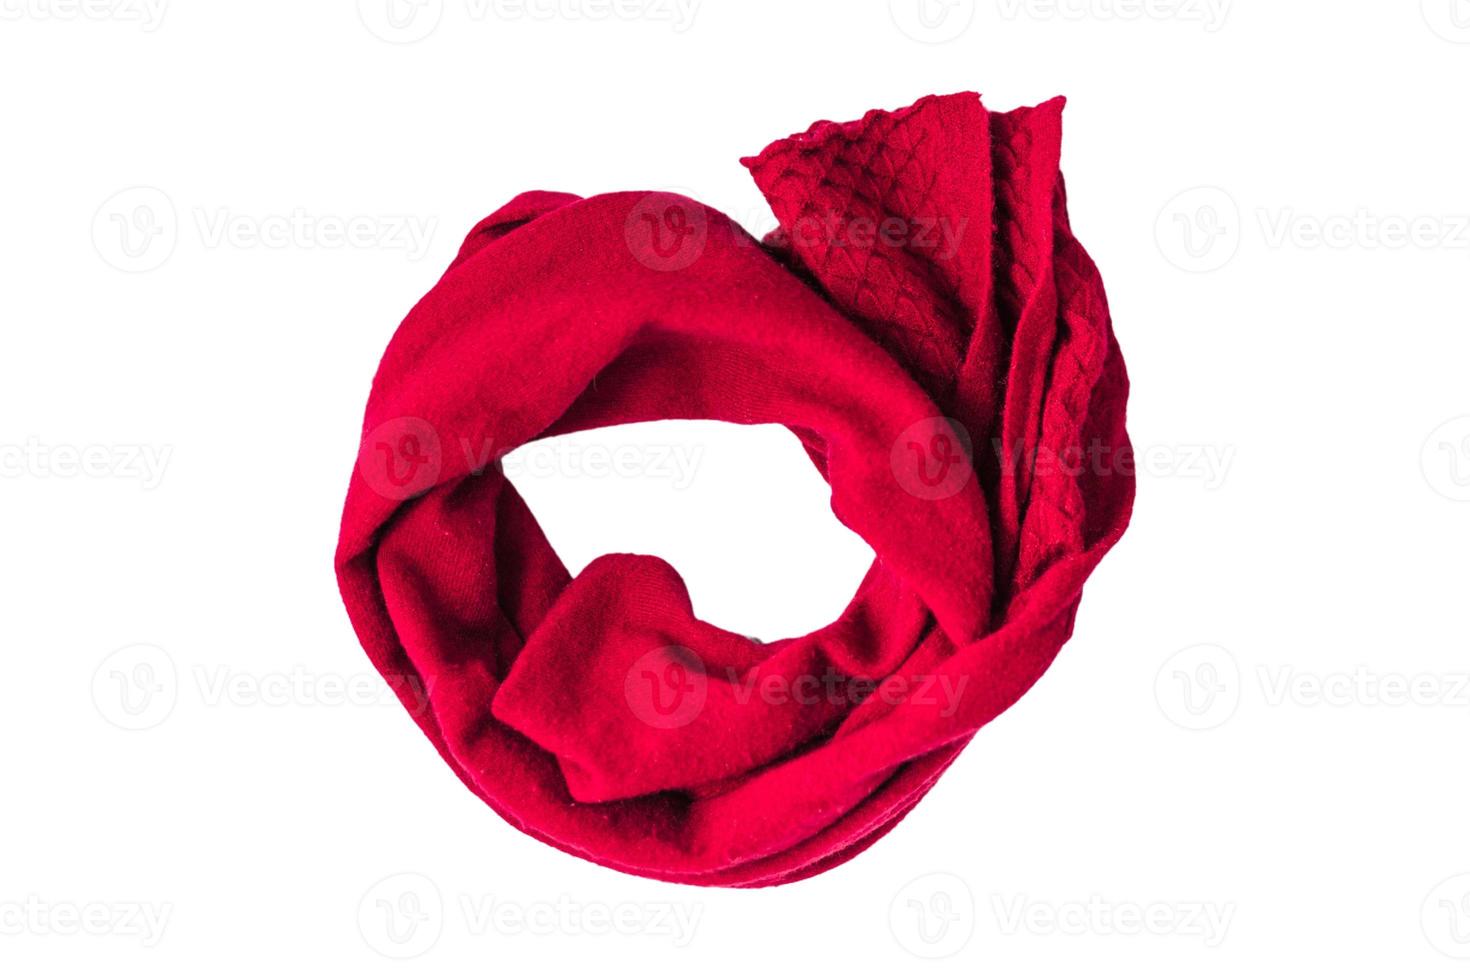 4079 röd scarf isolerat på en transparent bakgrund foto